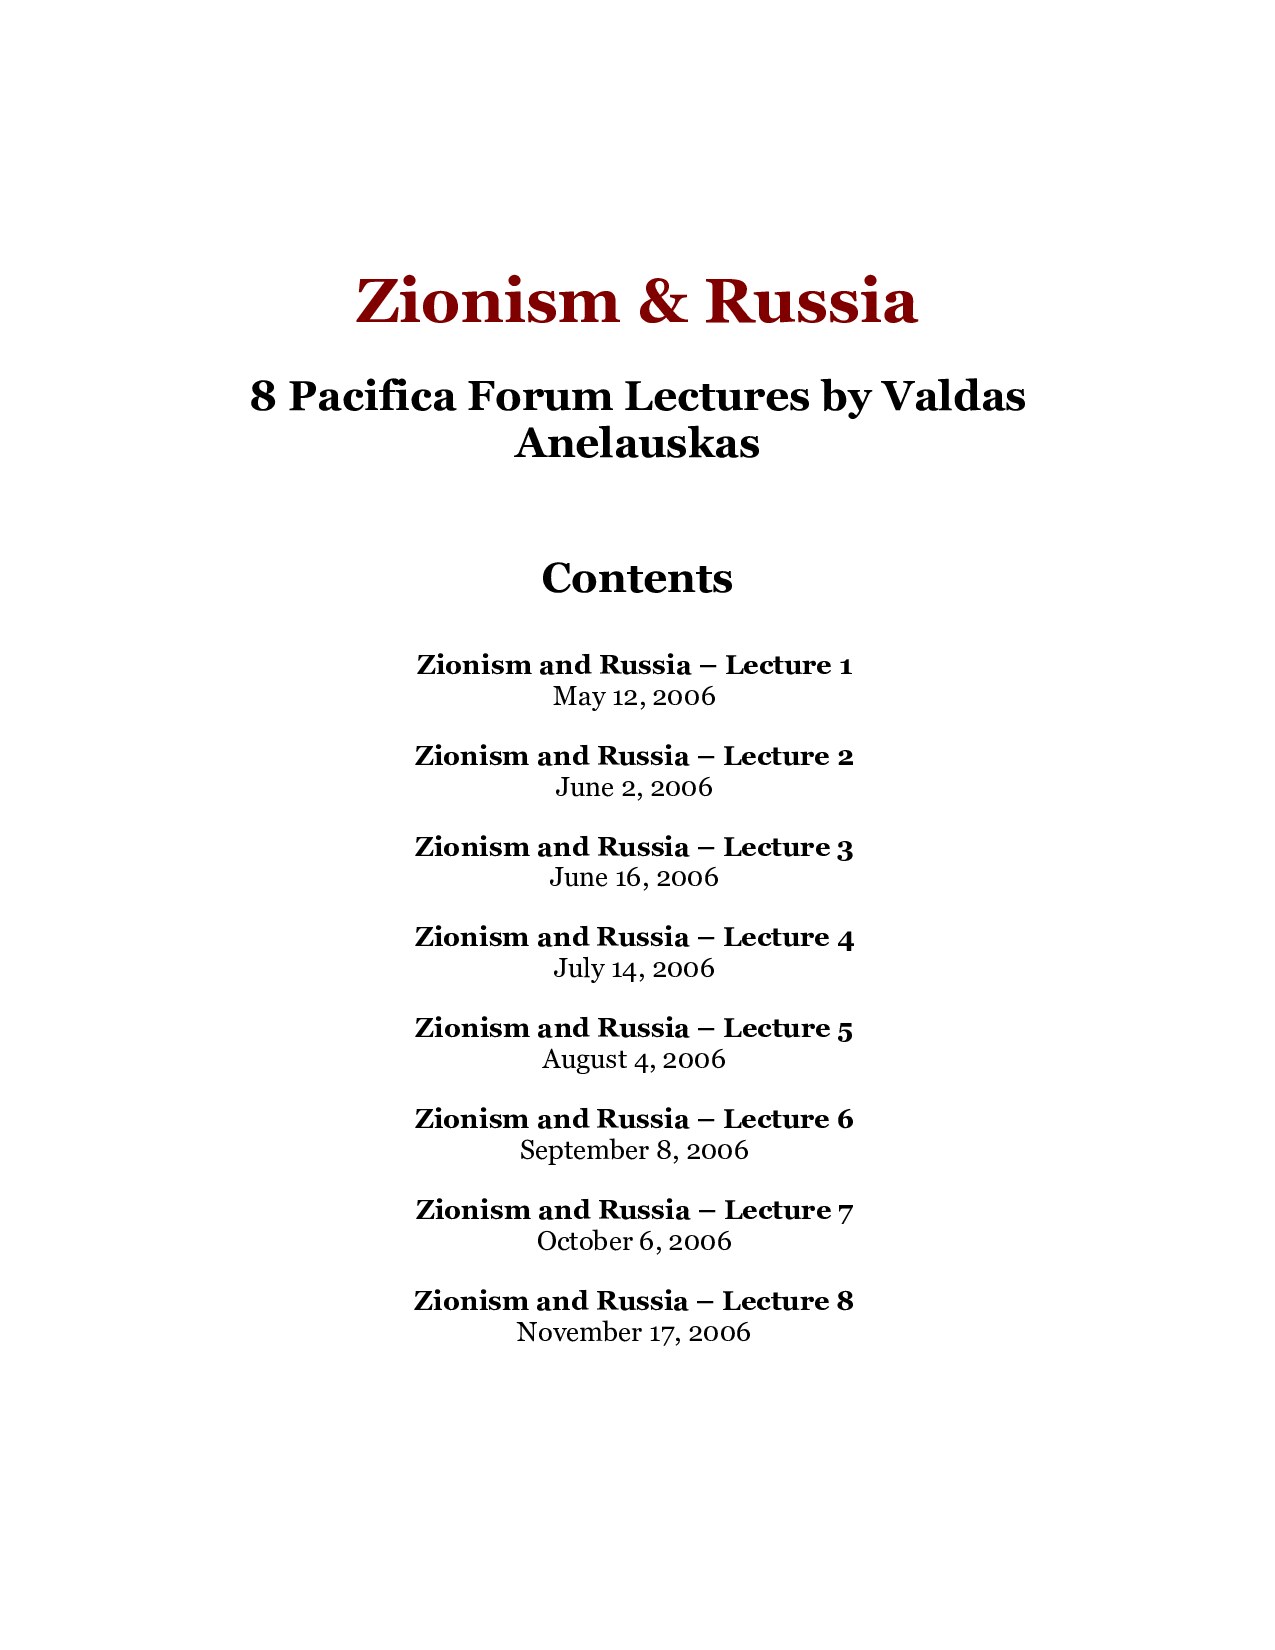 Anelauskas, Valdas; Zionism & Russia